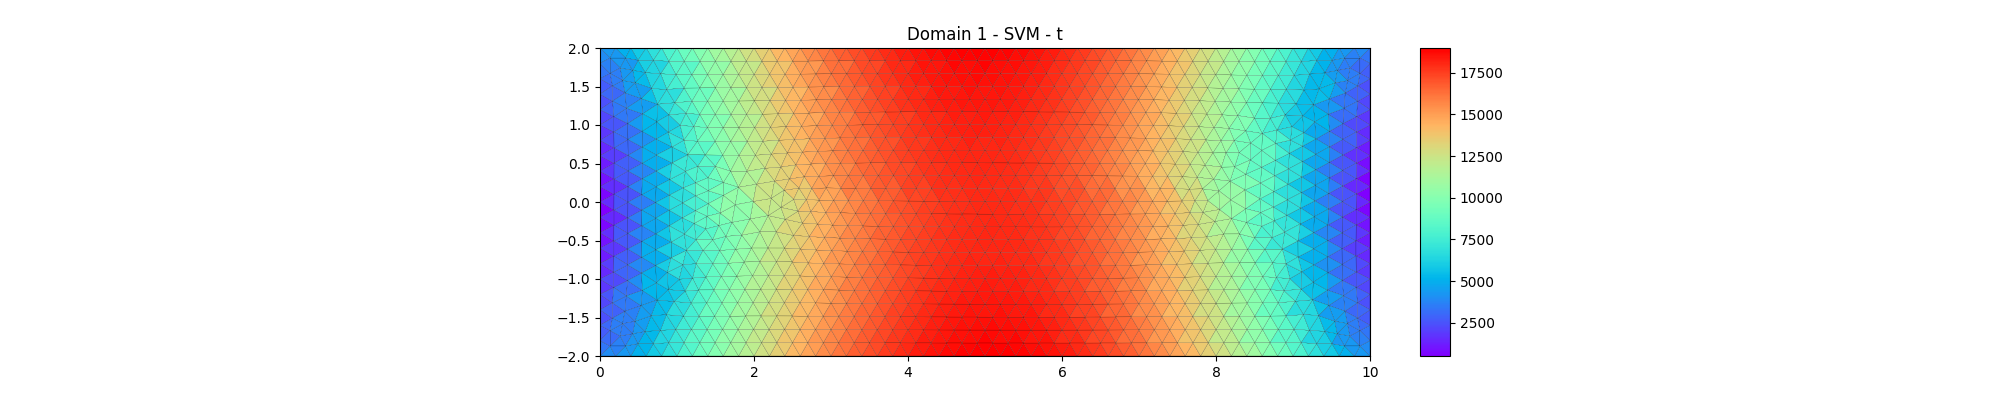 Domain 1 - SVM - t